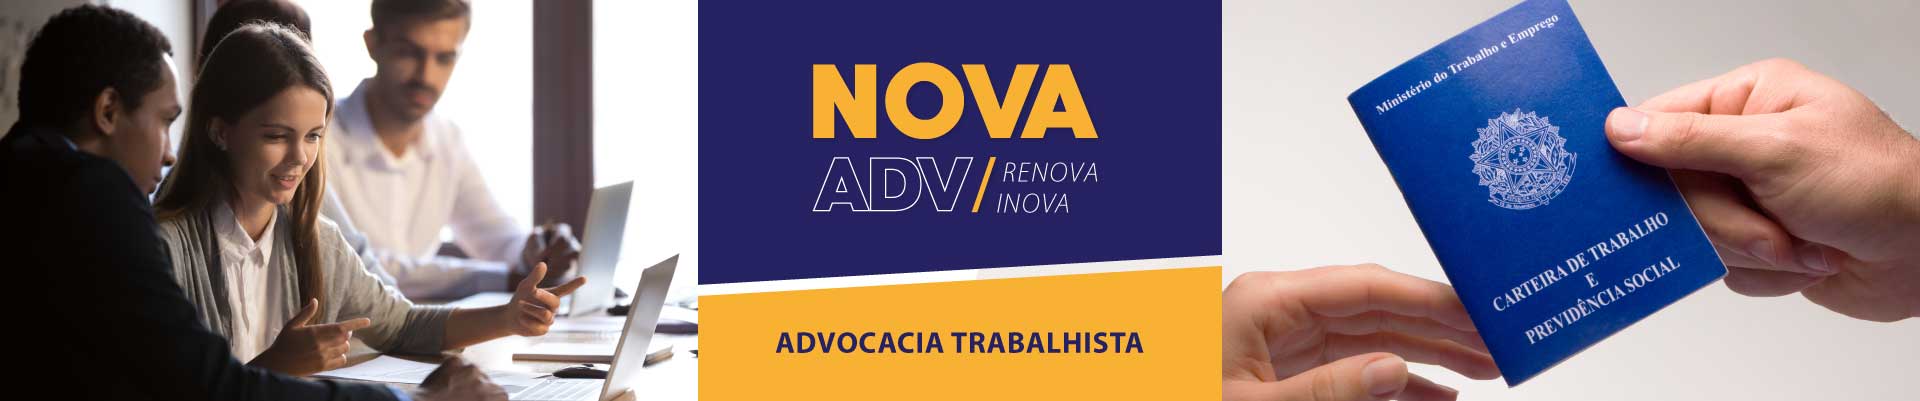 NovaAdv - Advocacia Trabalhista